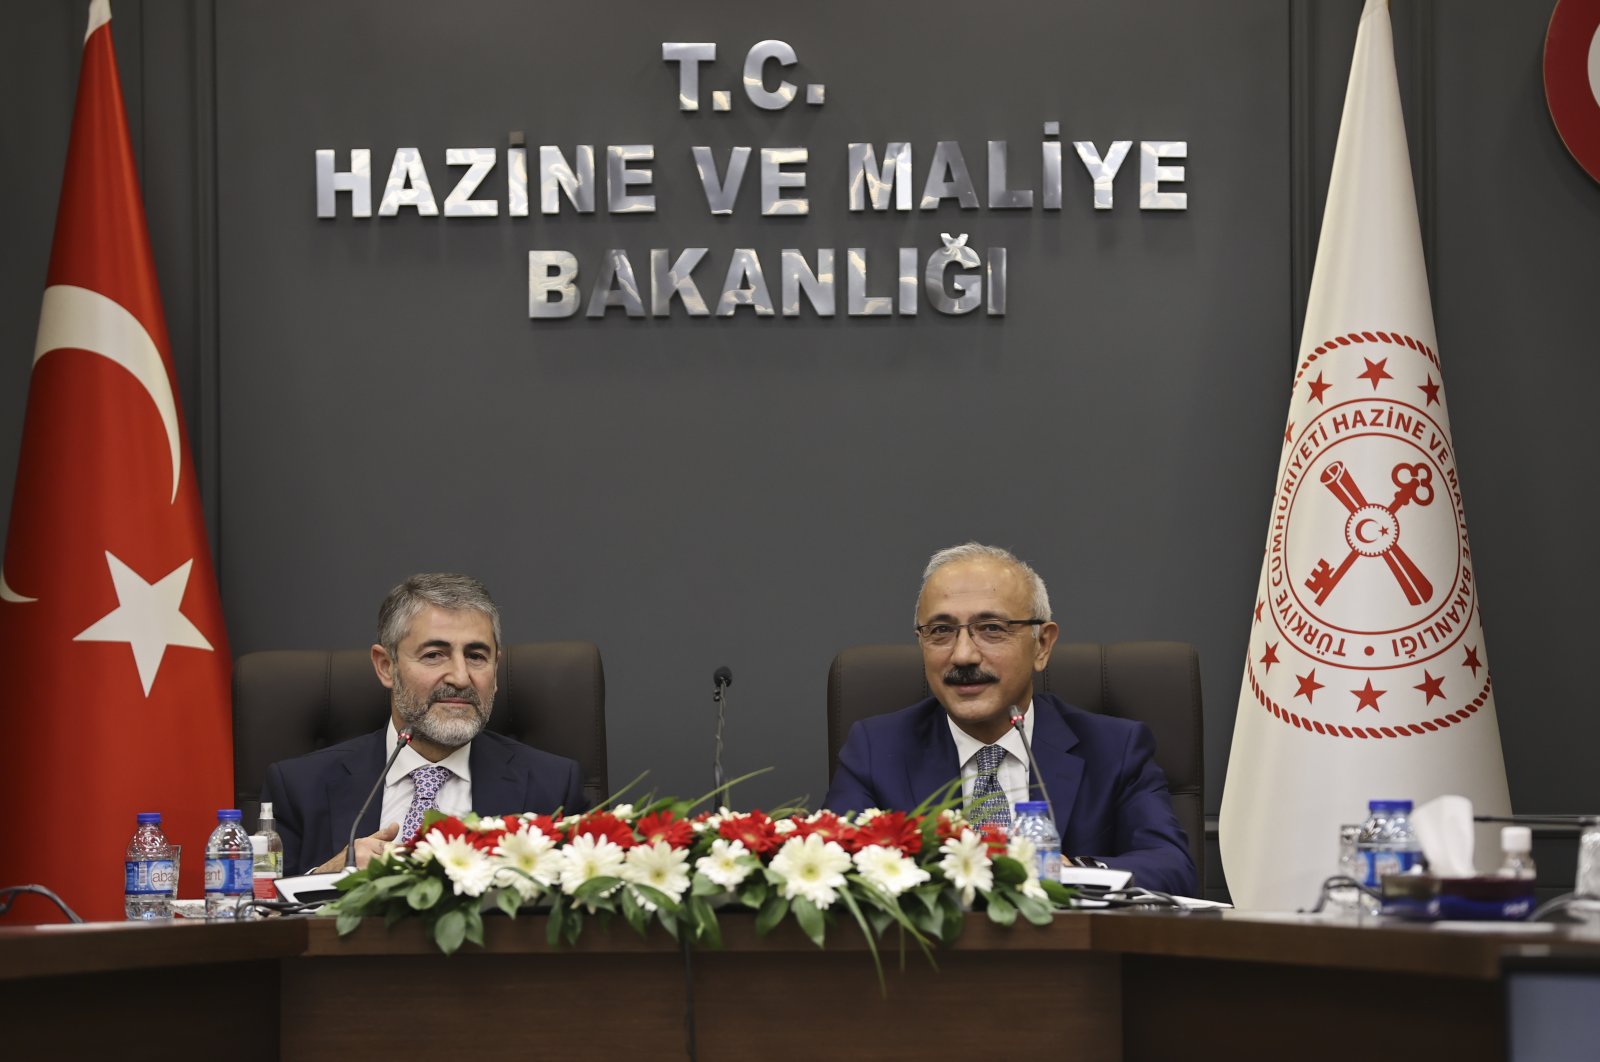 Newly appointed Treasury and Finance Minister Nureddin Nebati (L) and his predecessor Lütfi Elvan attend a handover ceremony in the capital Ankara, Turkey, Dec. 2, 2021. (AA Photo)